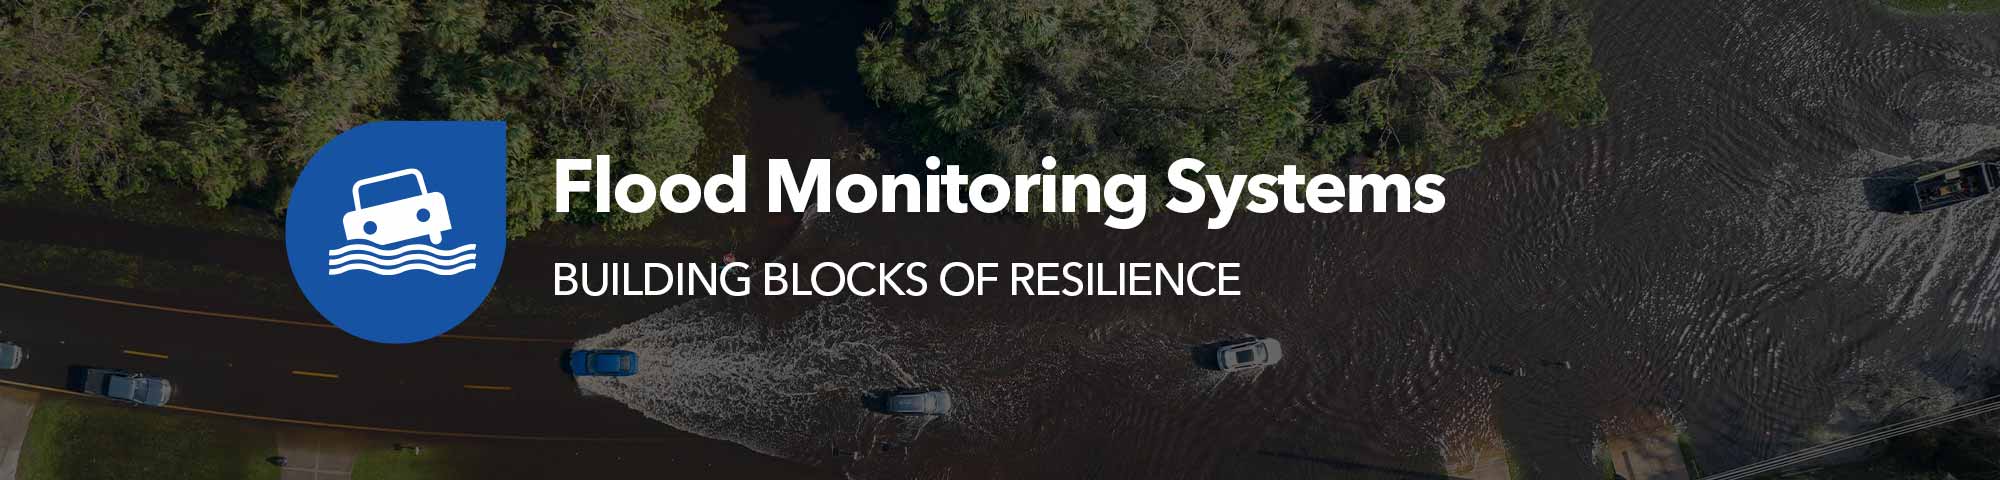 flood monitoring warning alert systems